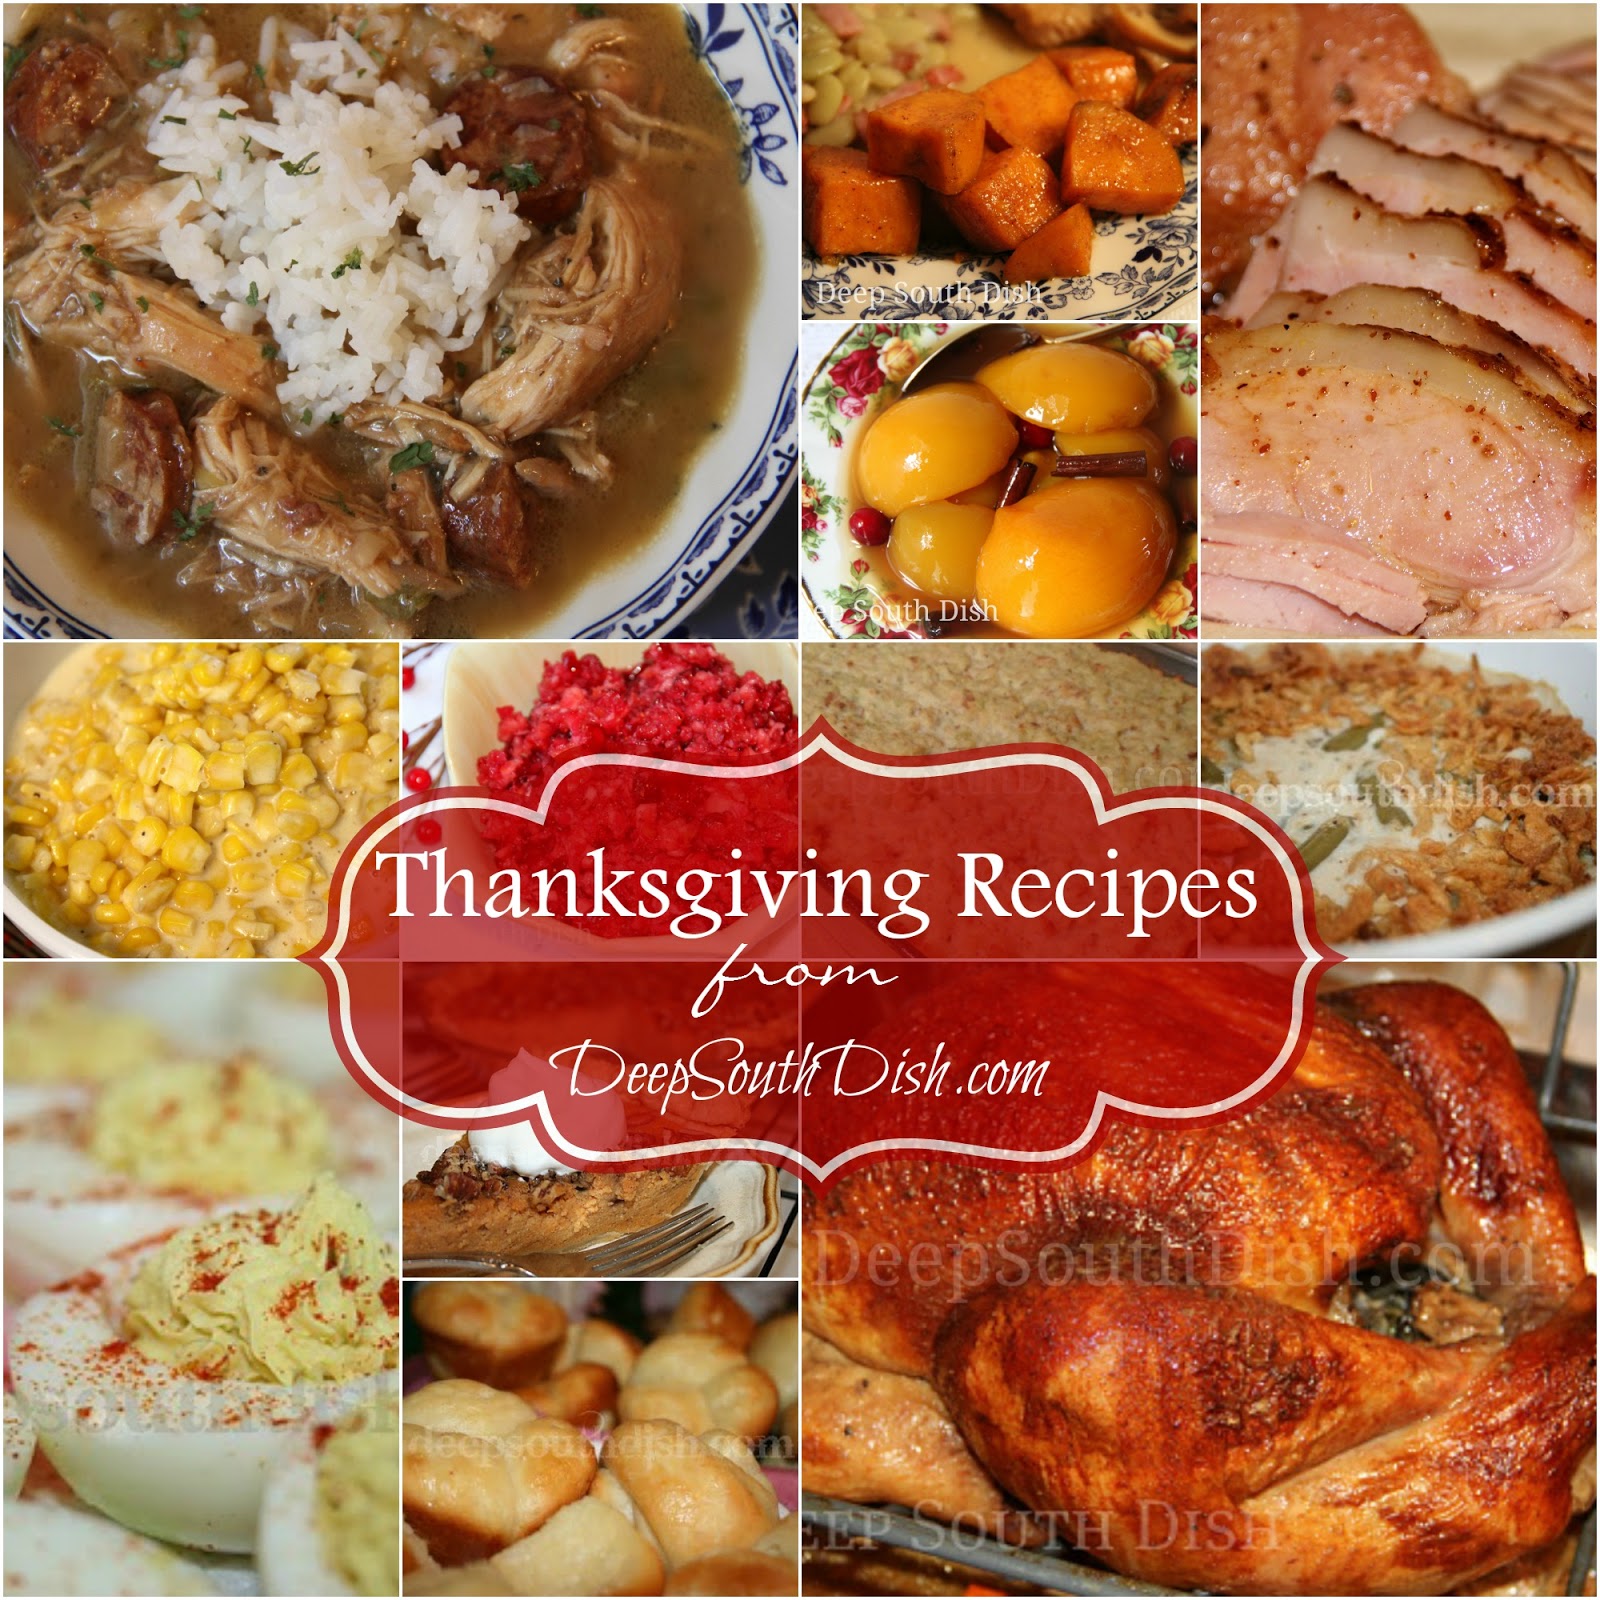 Deep South Dish Deep South Southern Thanksgiving Recipes And Menu Ideas